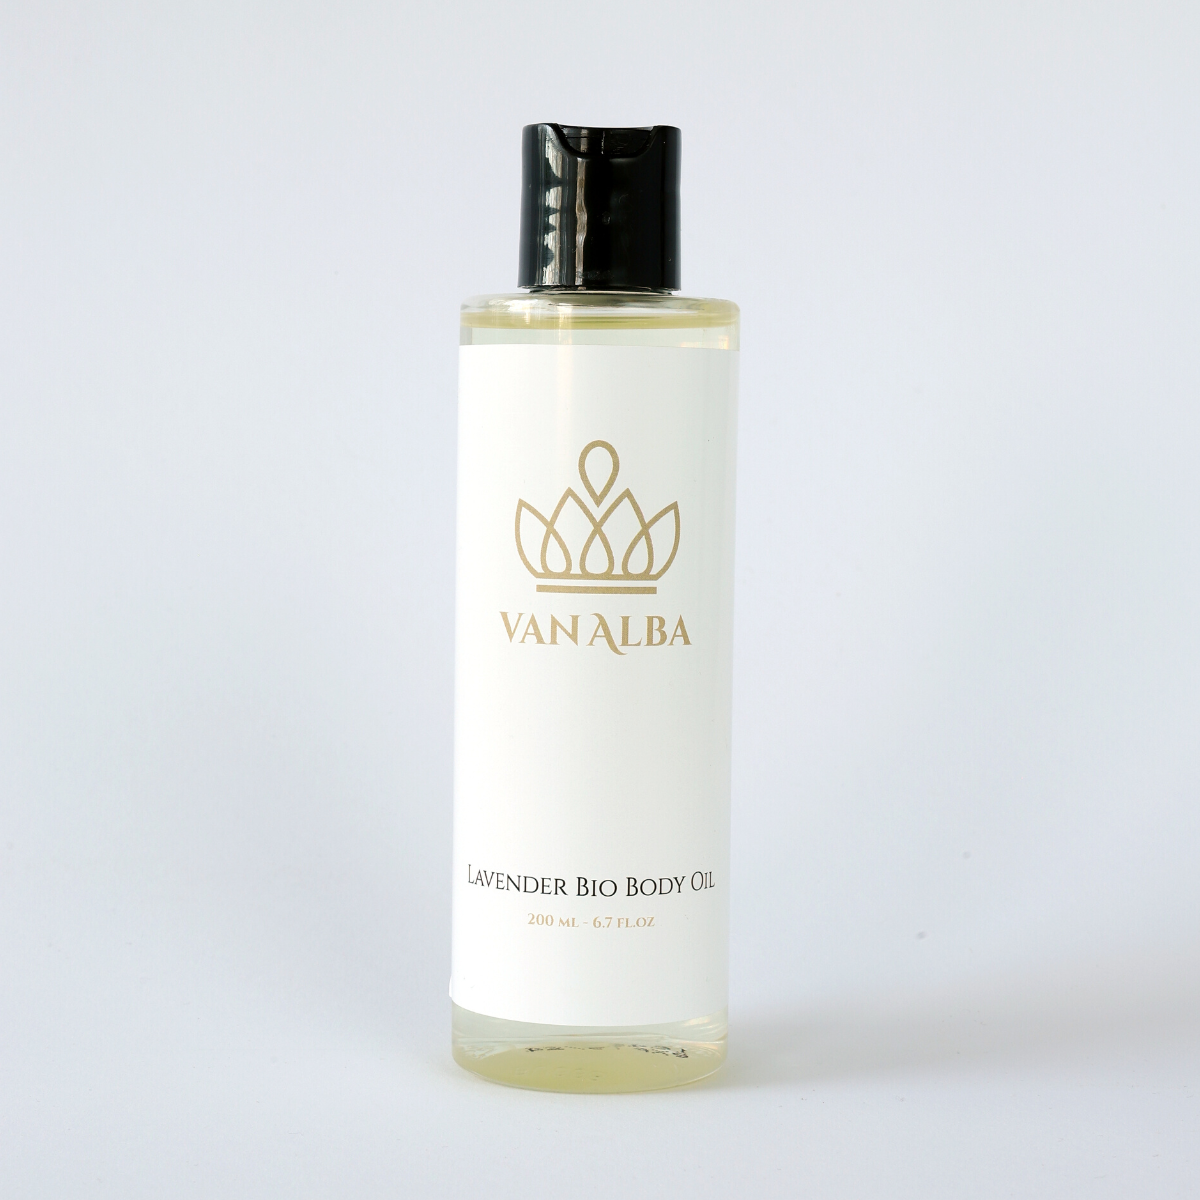 Almond Bio Body Oil infused with lavender scent-200 ml - Van Alba ™